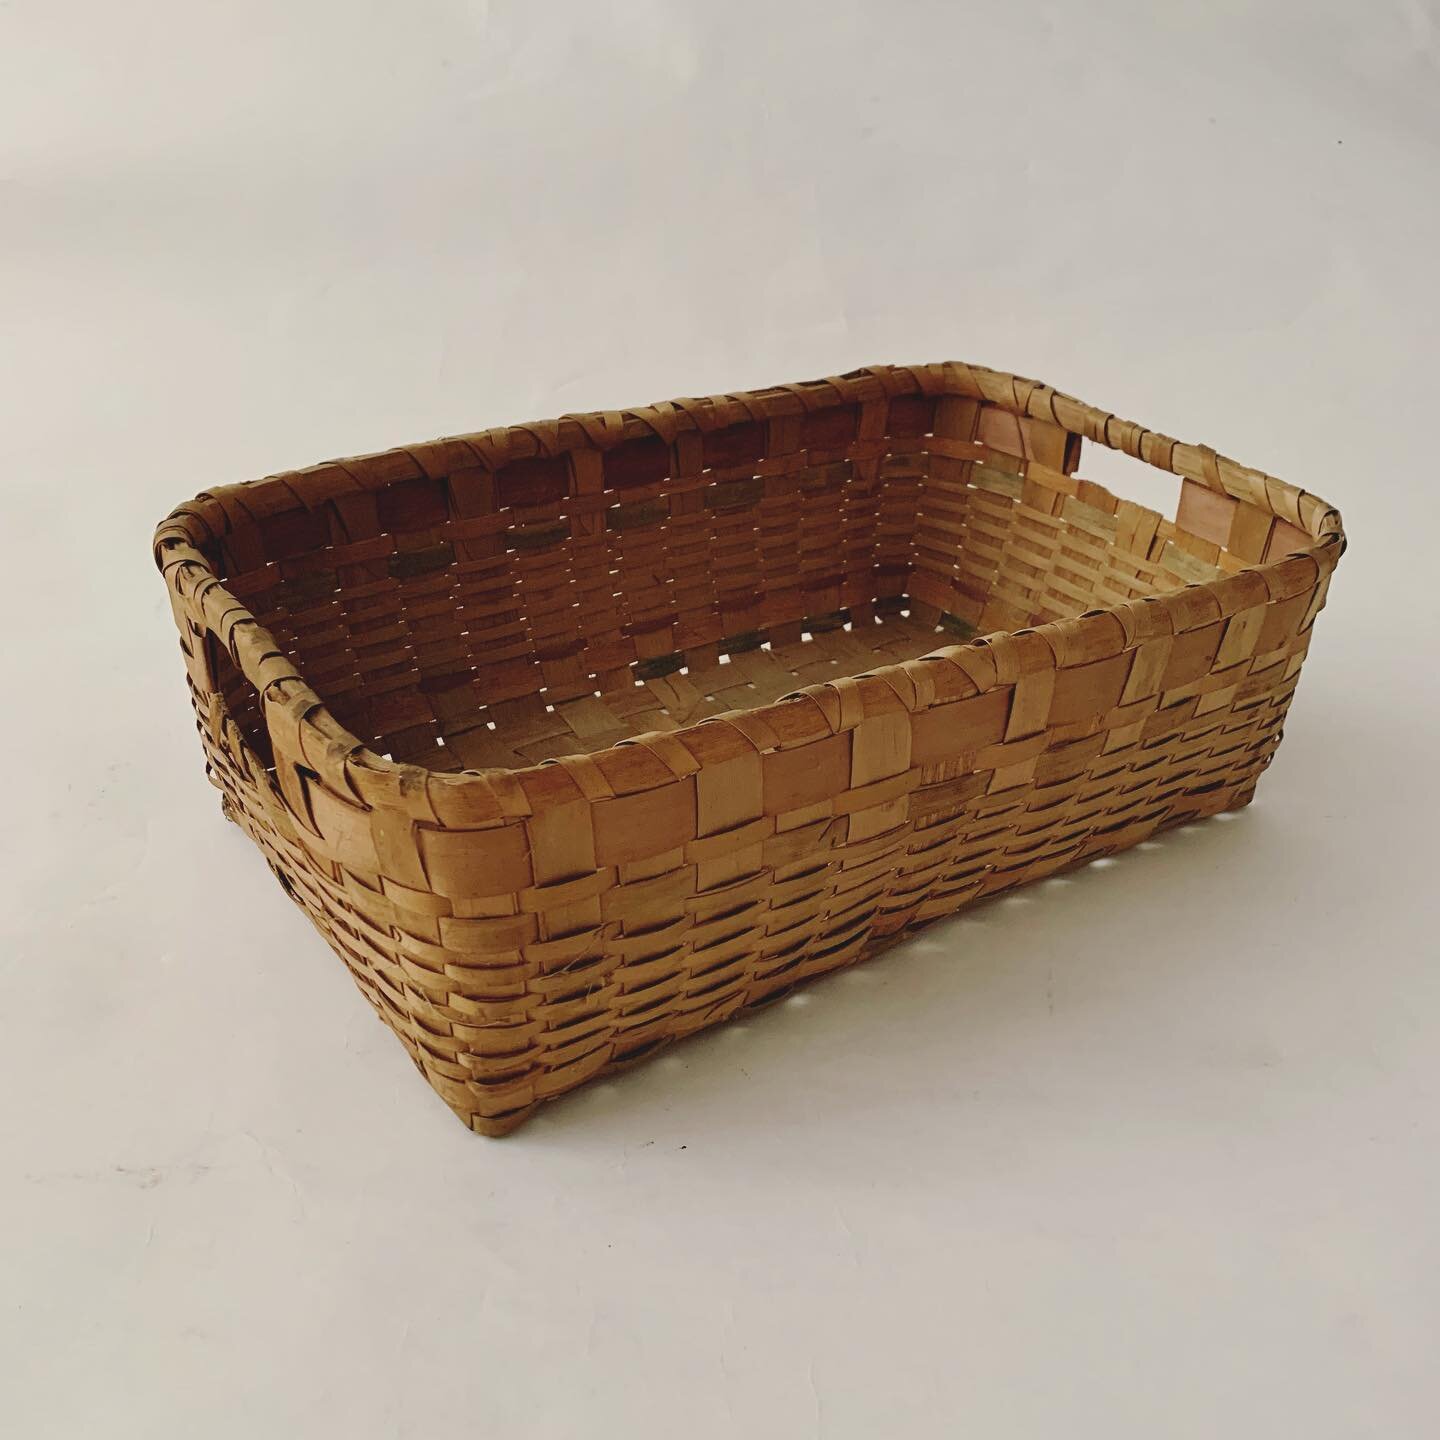 A beautiful indigenous woven splint basket 18x12x6&rdquo;H $68.00 #citycountrycottagecabin #farmhousedecor #interiors #modernfarmhouse #dmforinq